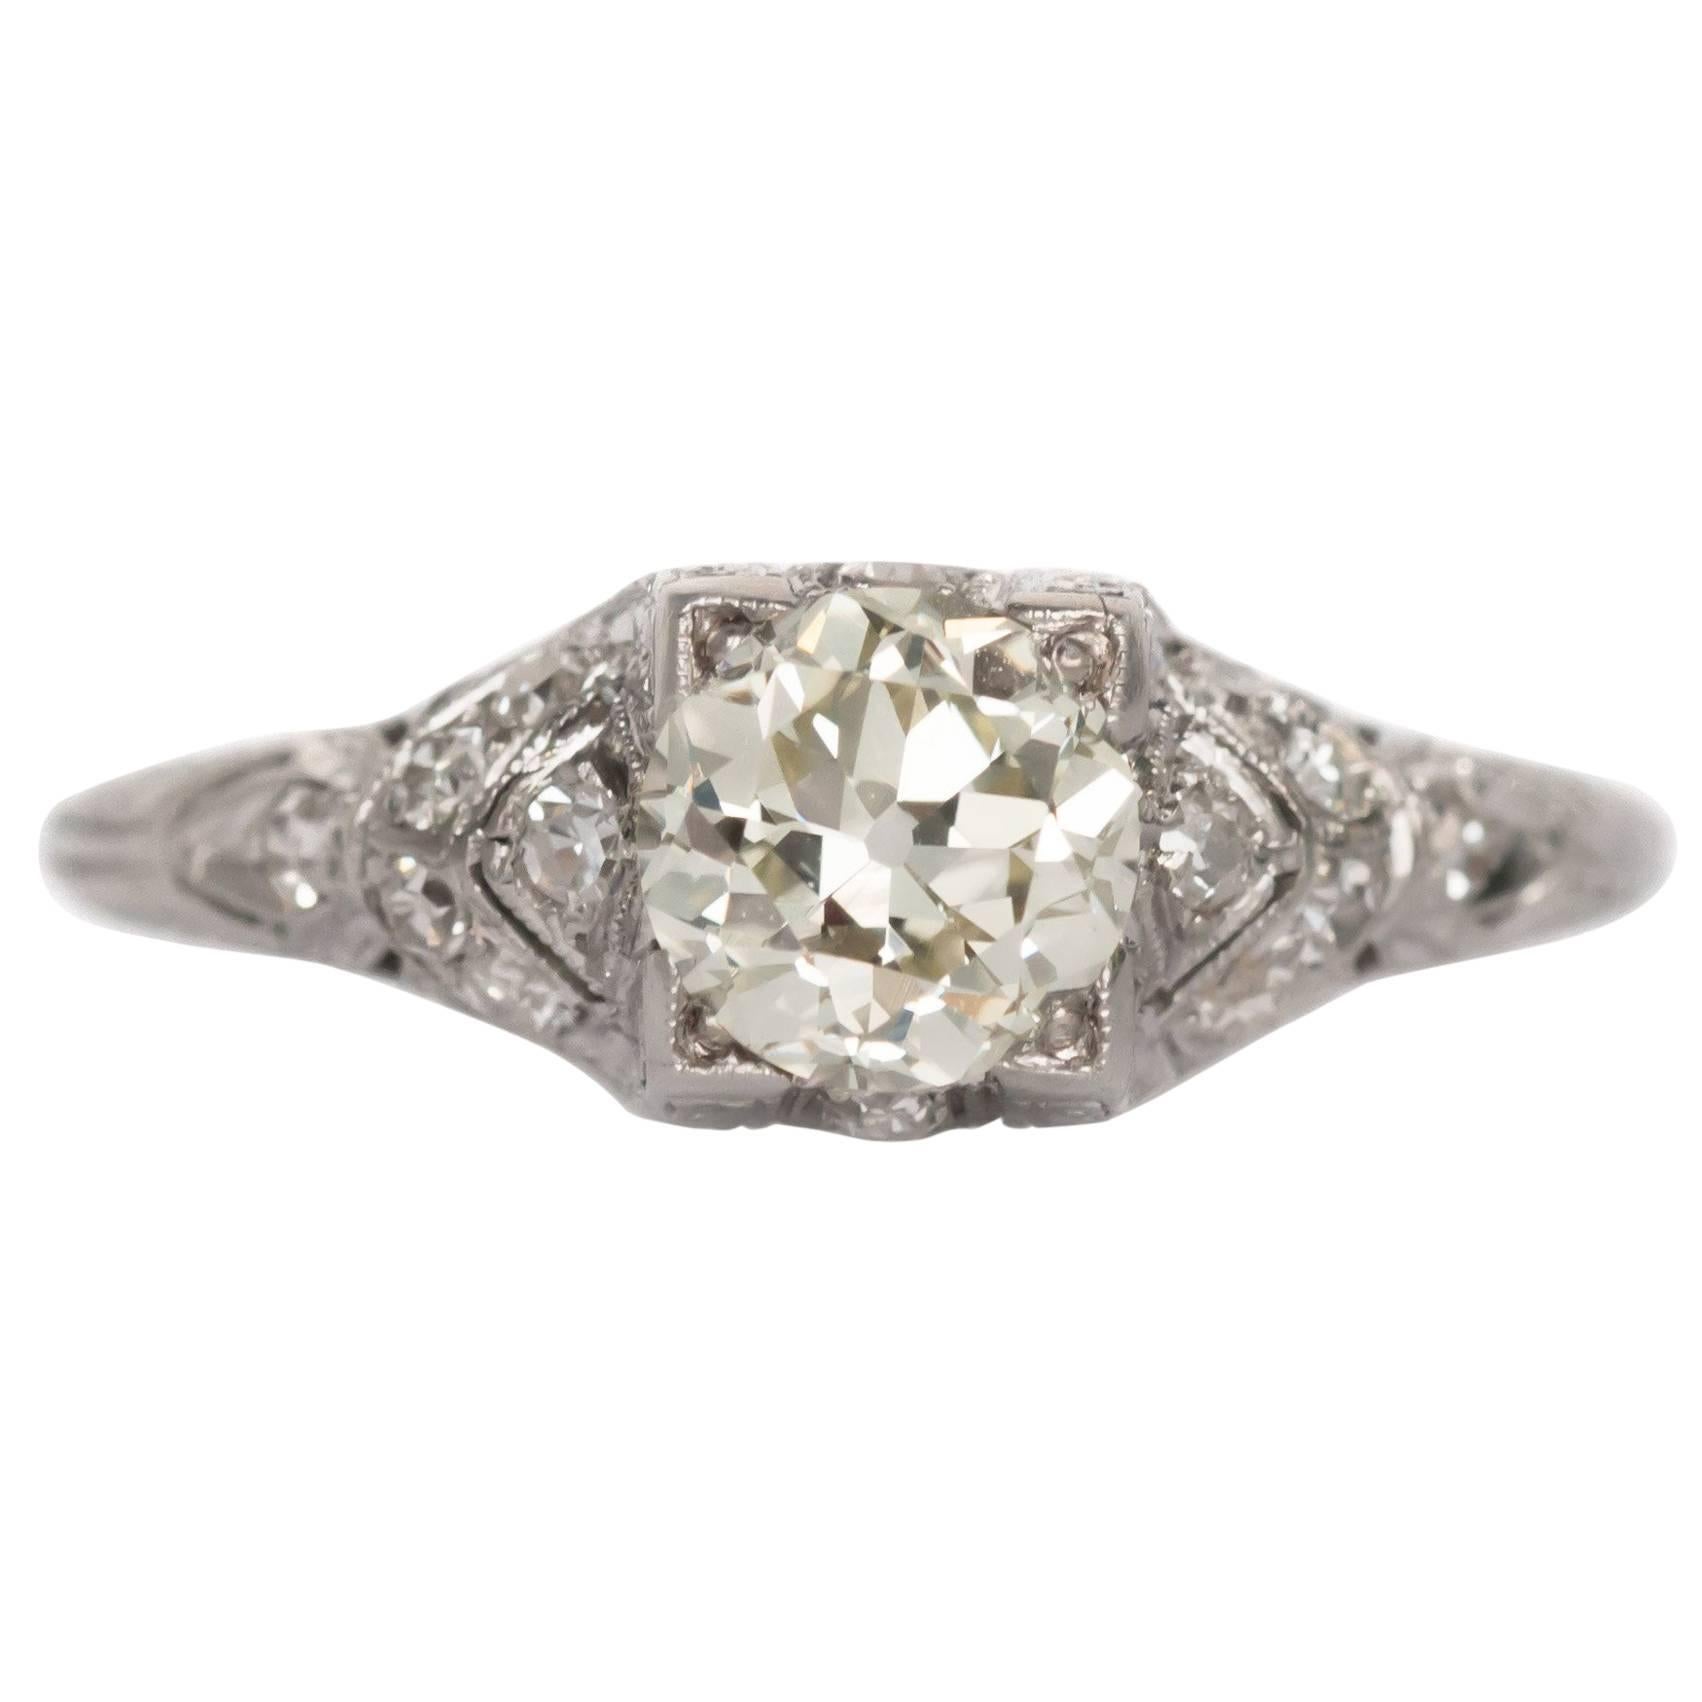 1.01 Carat Diamond and Platinum Engagement Ring